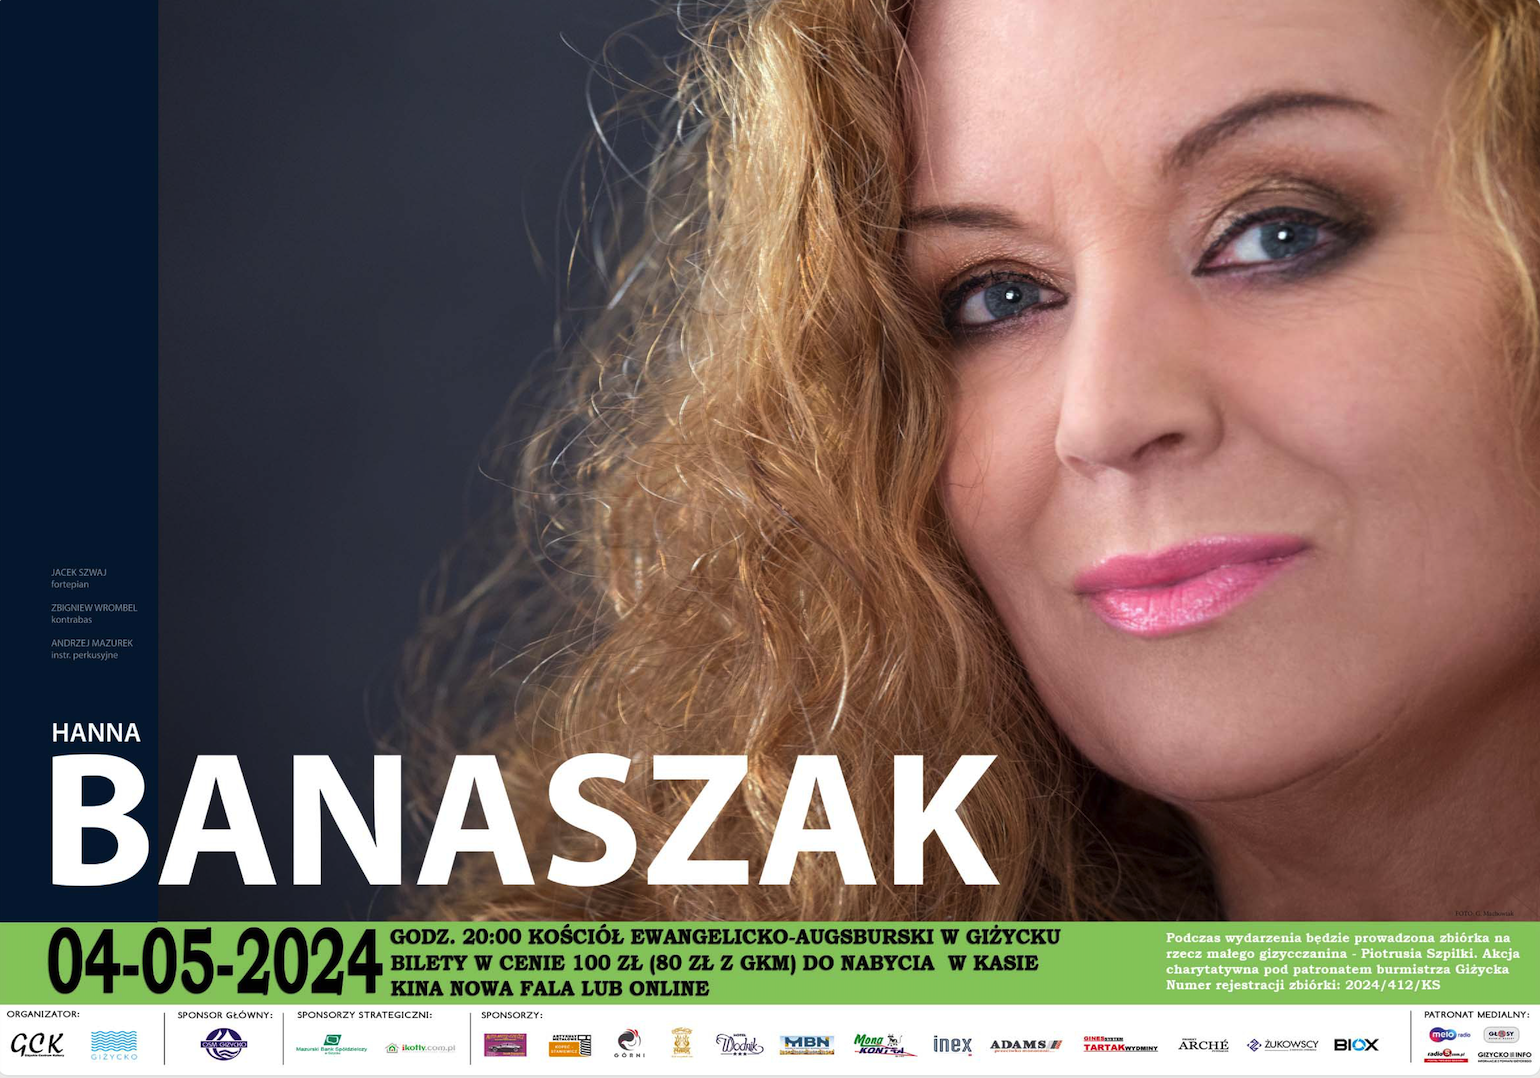 Hanna Banaszak